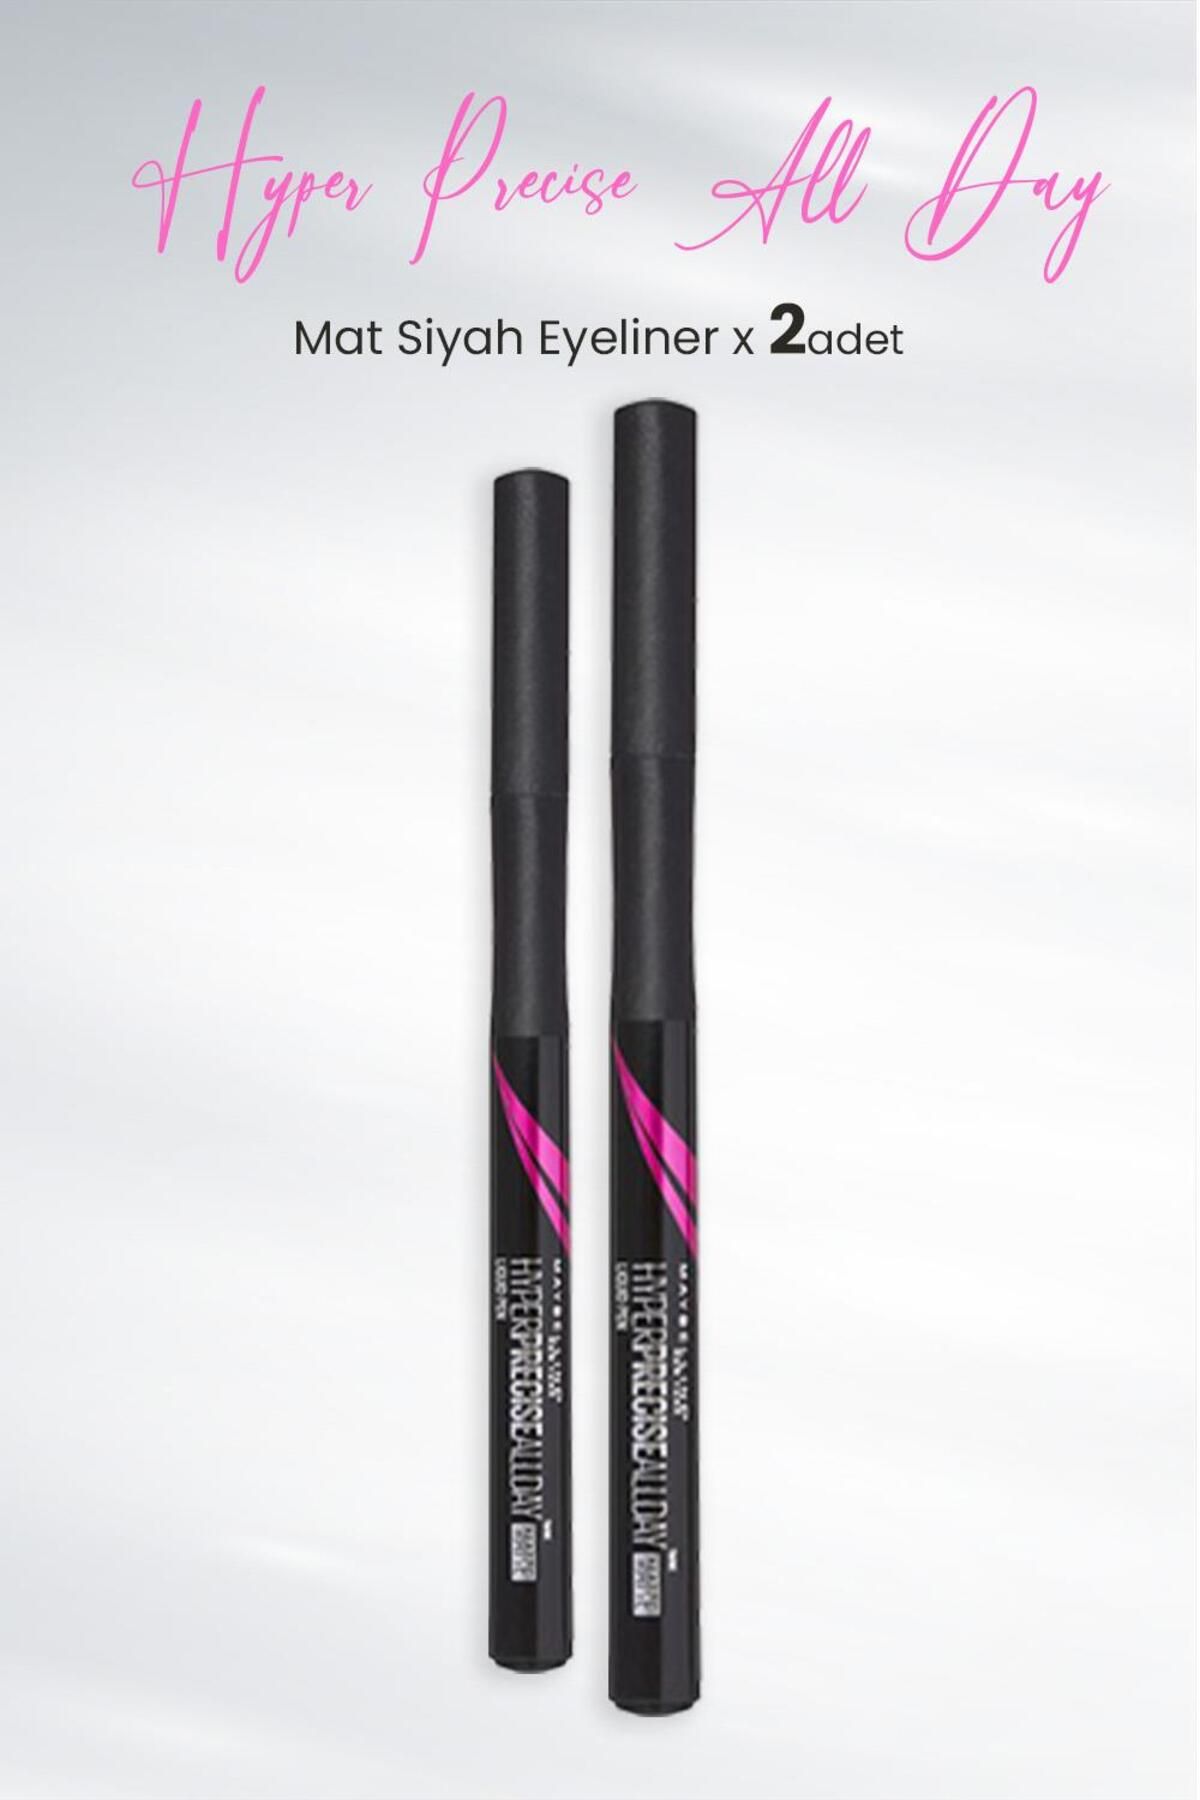 Maybelline New York Eyeliner Hyper Precise All Day Mat Siyah X 2 Adet